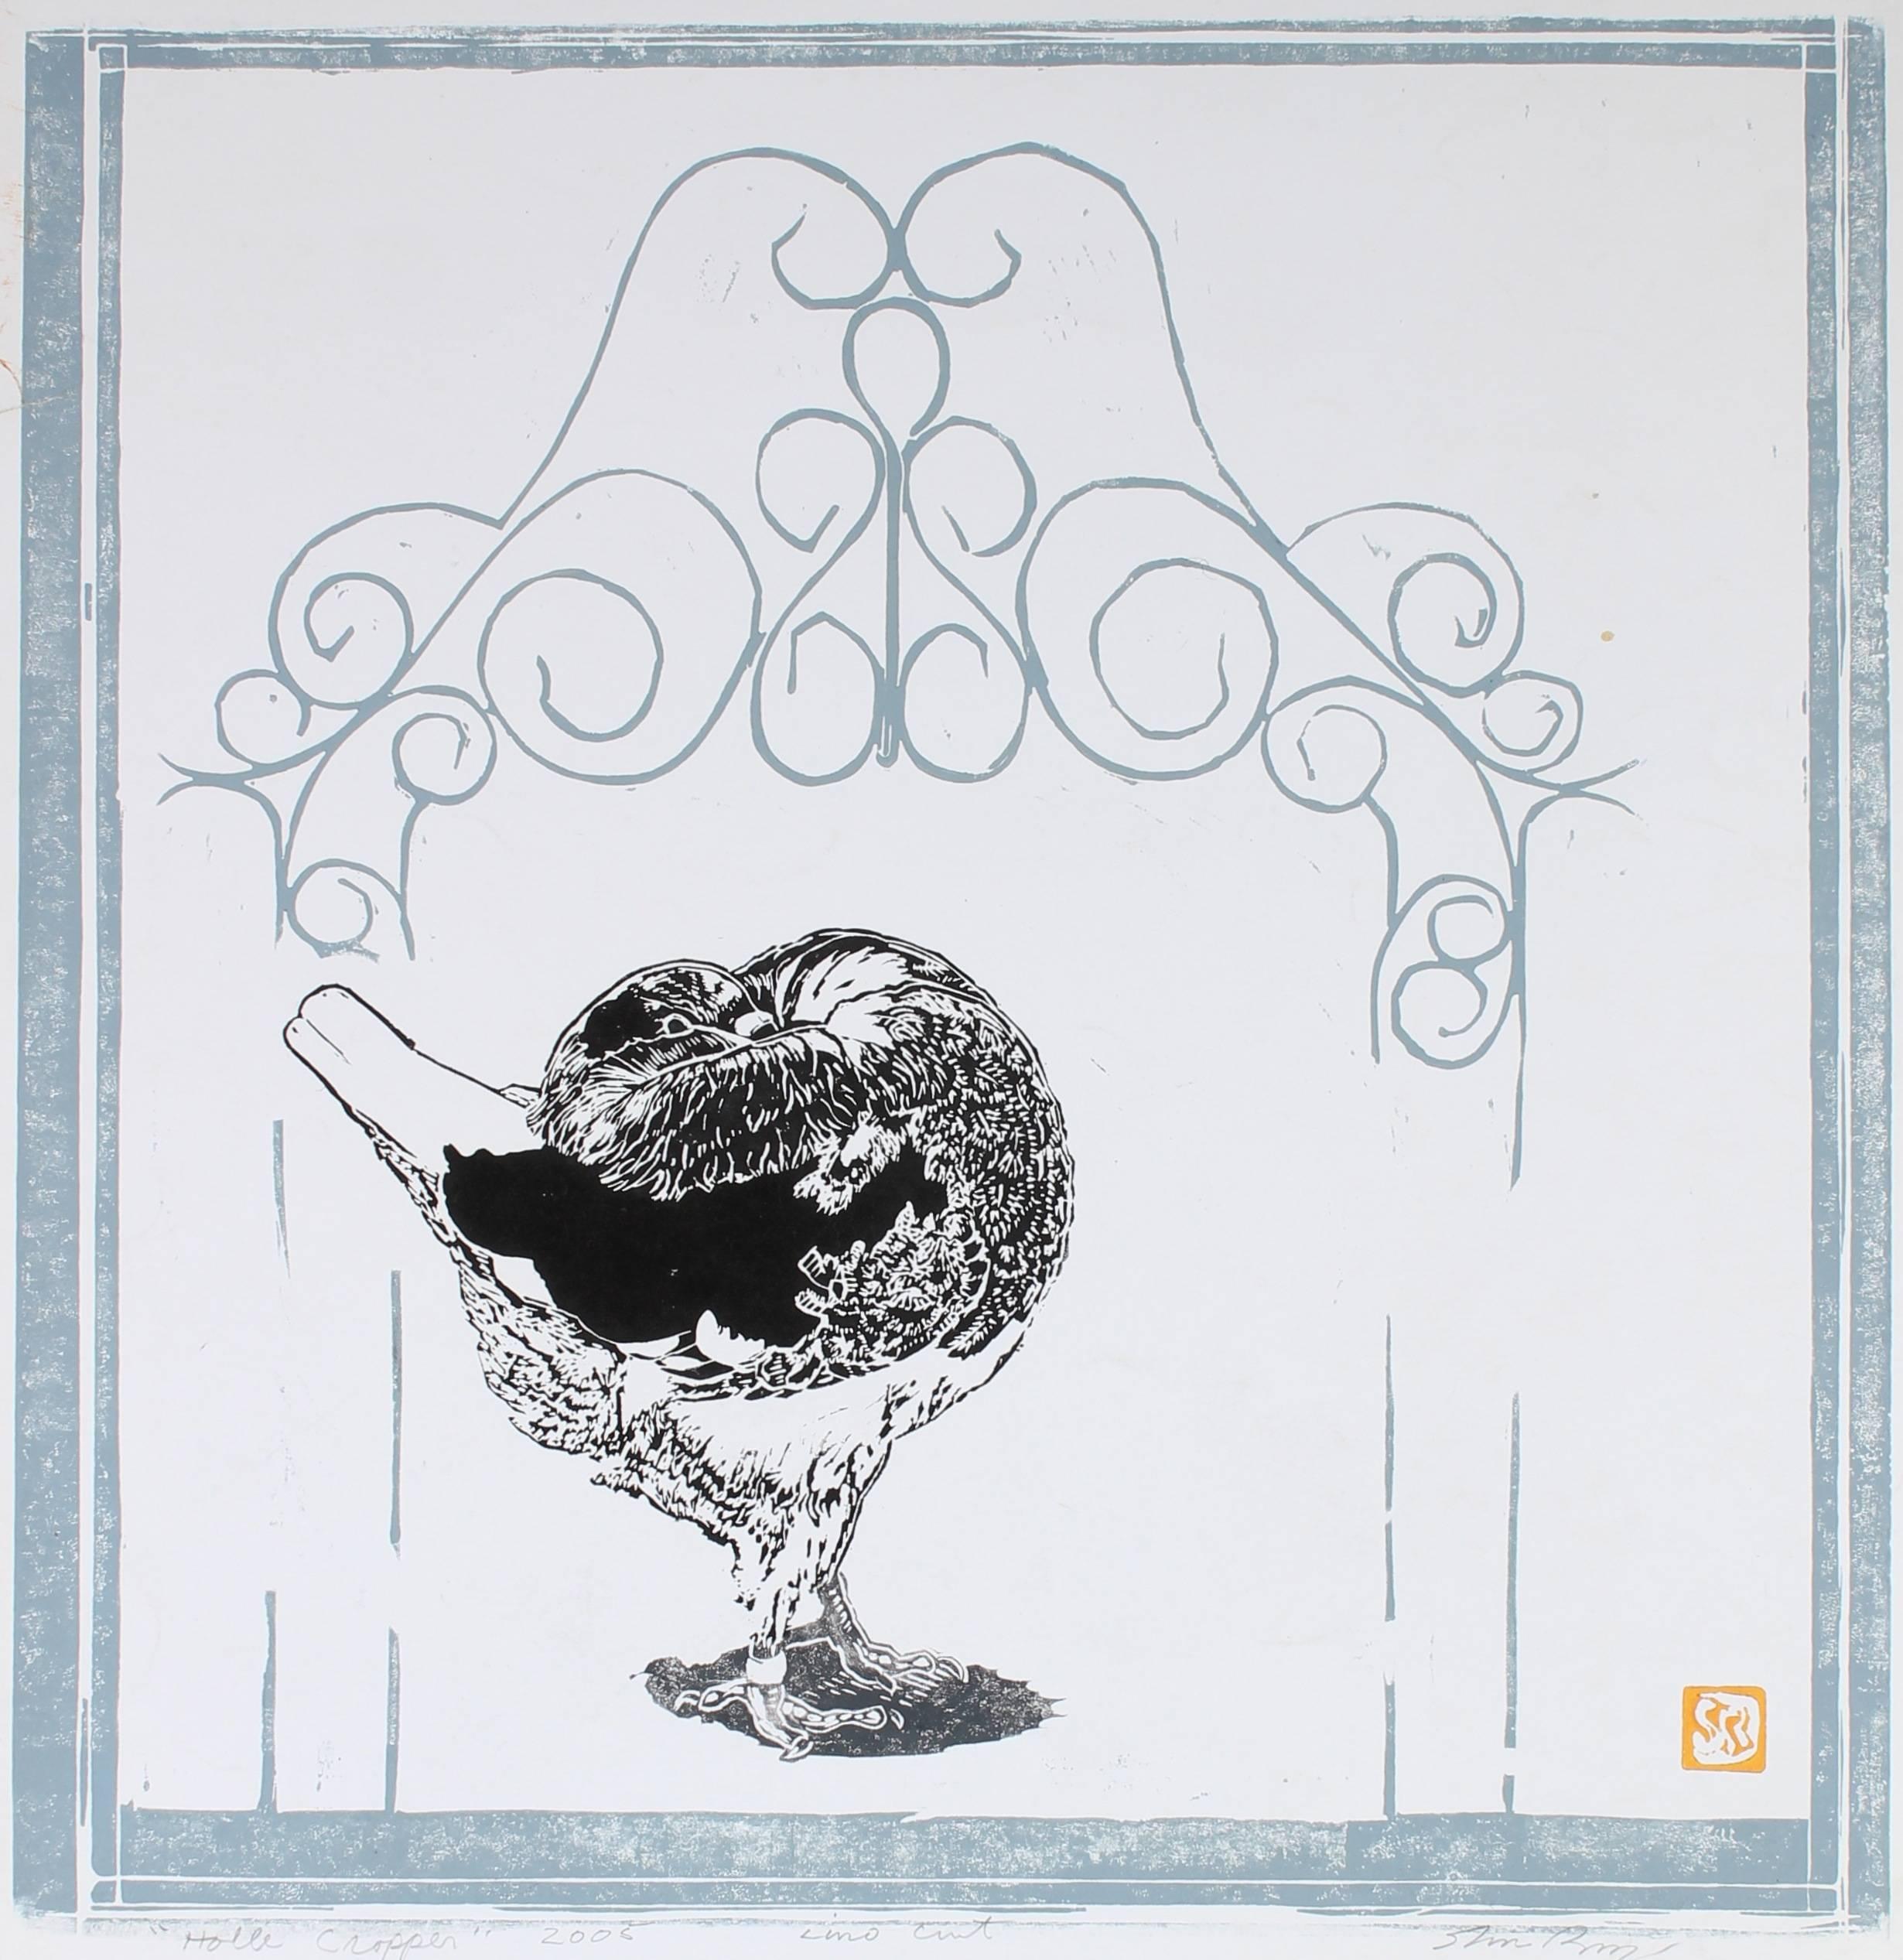 Steve Rogers Animal Print - "Holle Cropper" Chicken Linocut Print, 2005